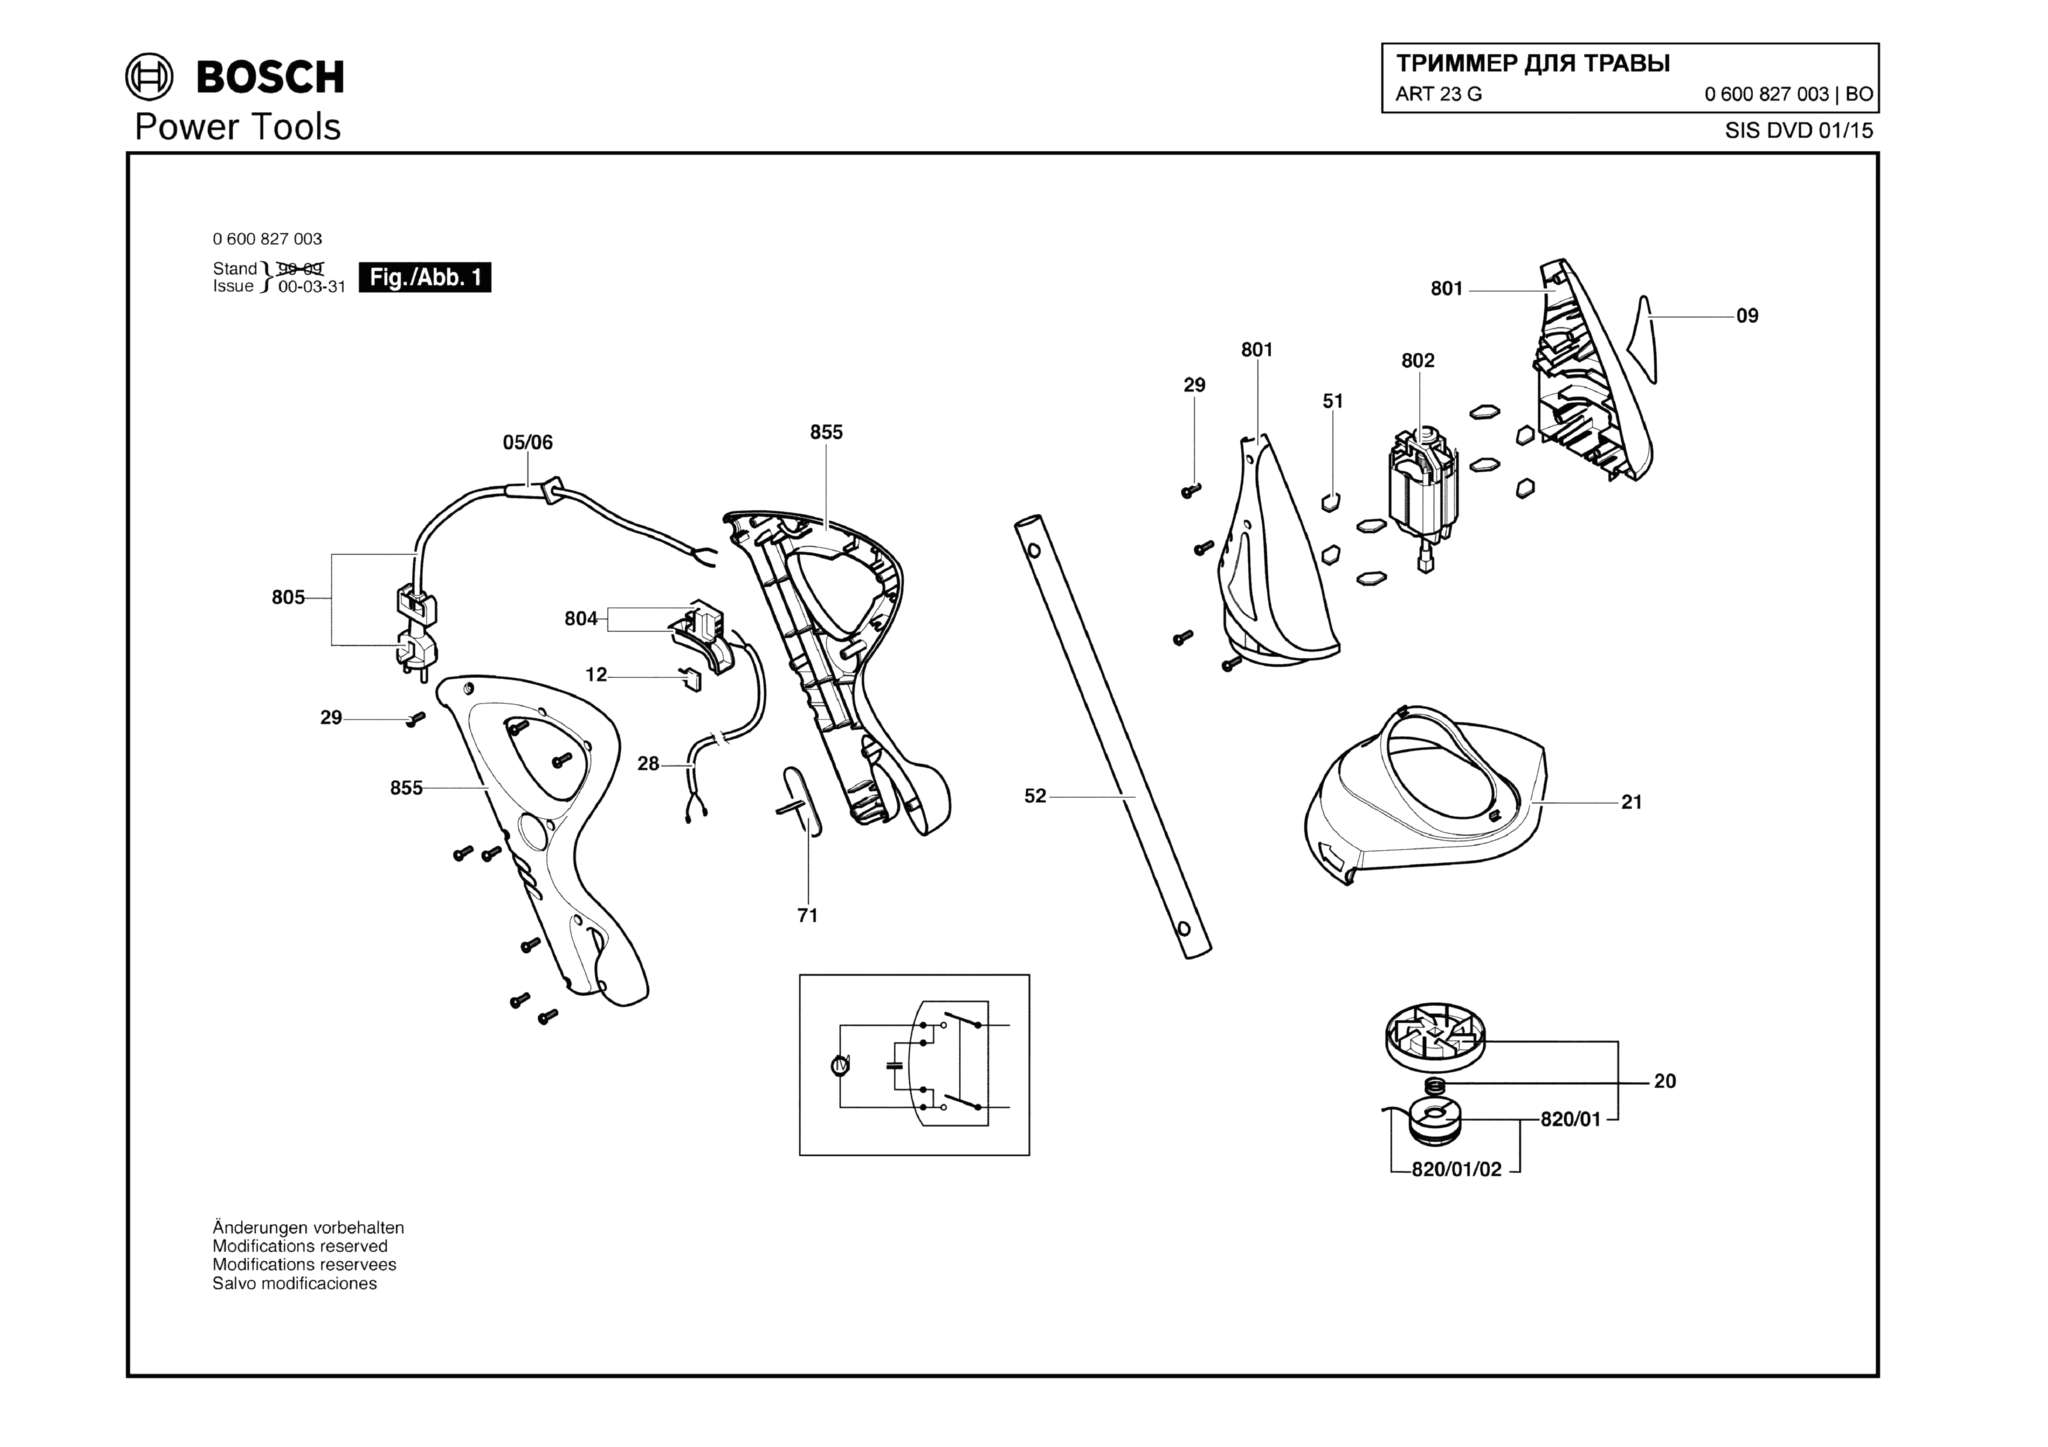 Запчасти, схема и деталировка Bosch ART 23 G (ТИП 0600827003)